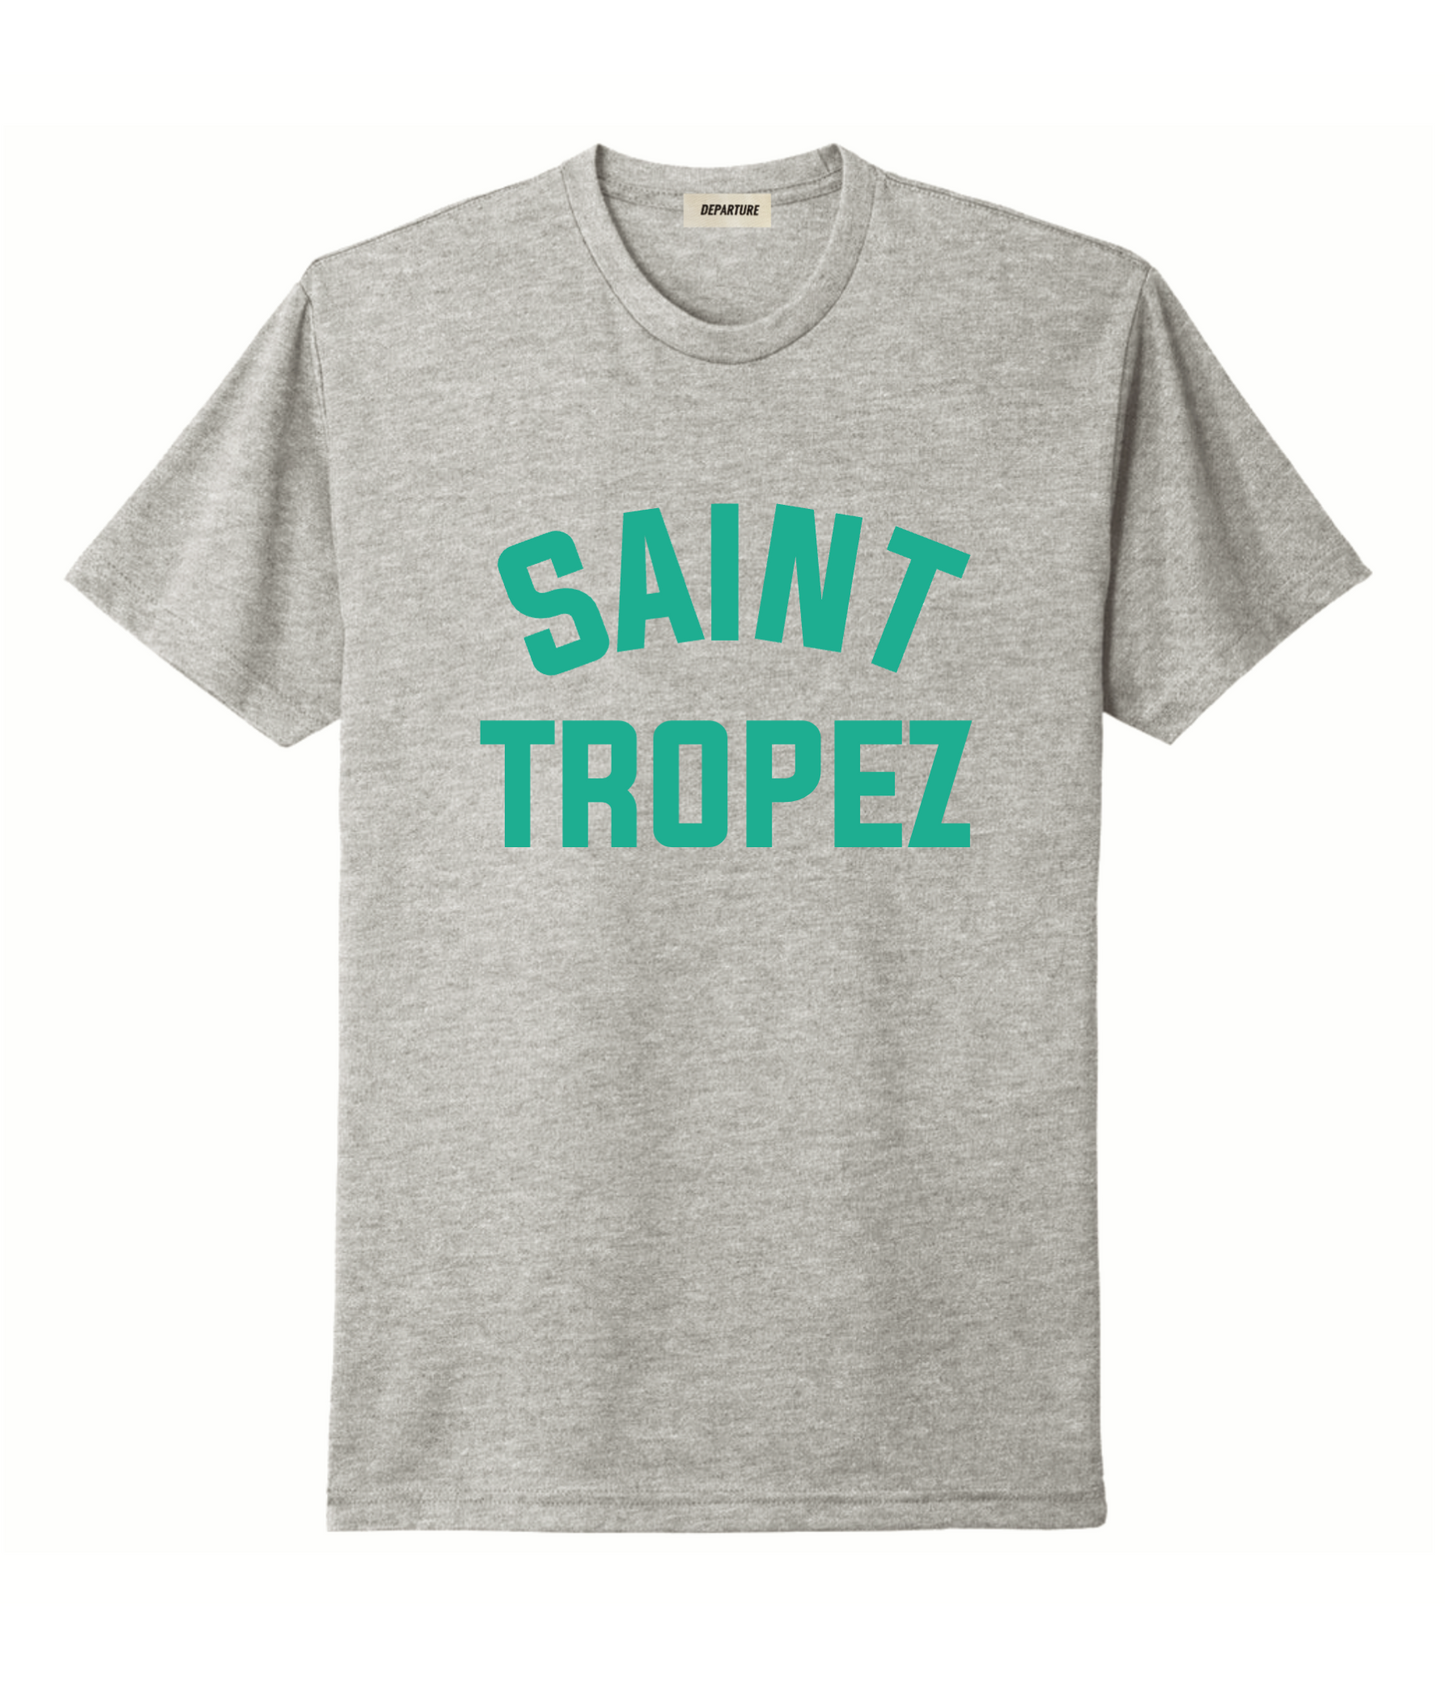 Saint Tropez Tee